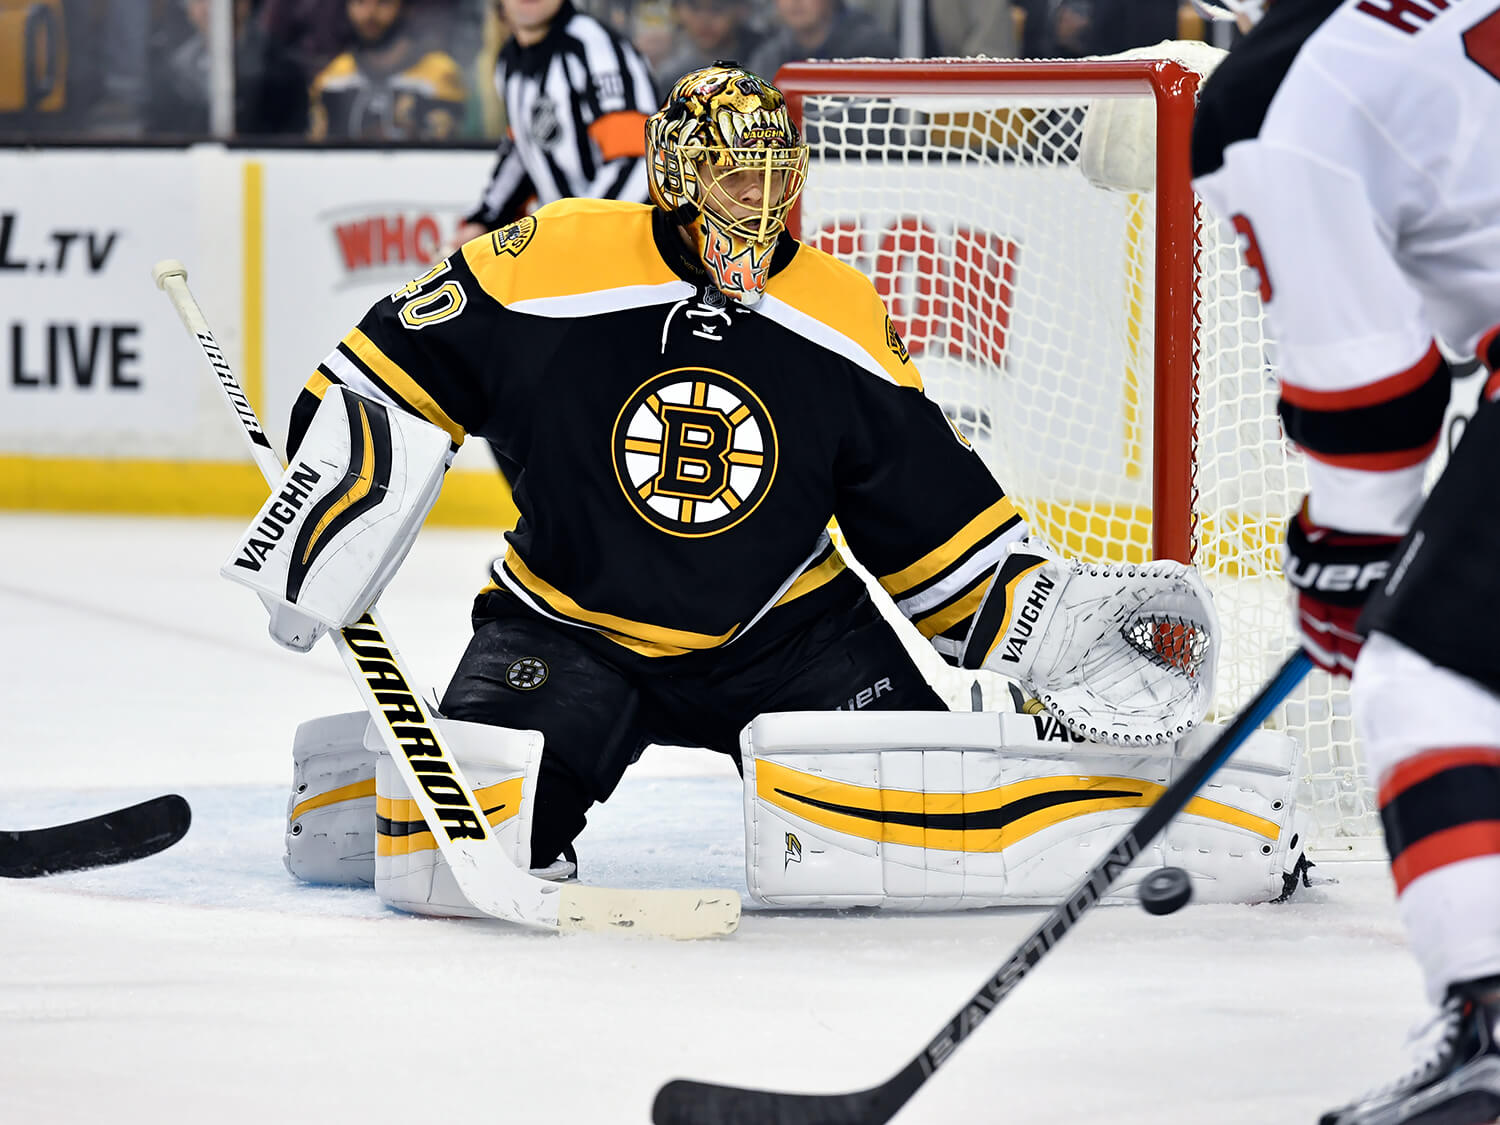 Bruins Return to Garden Ice Looking to Rebound Against Jackets